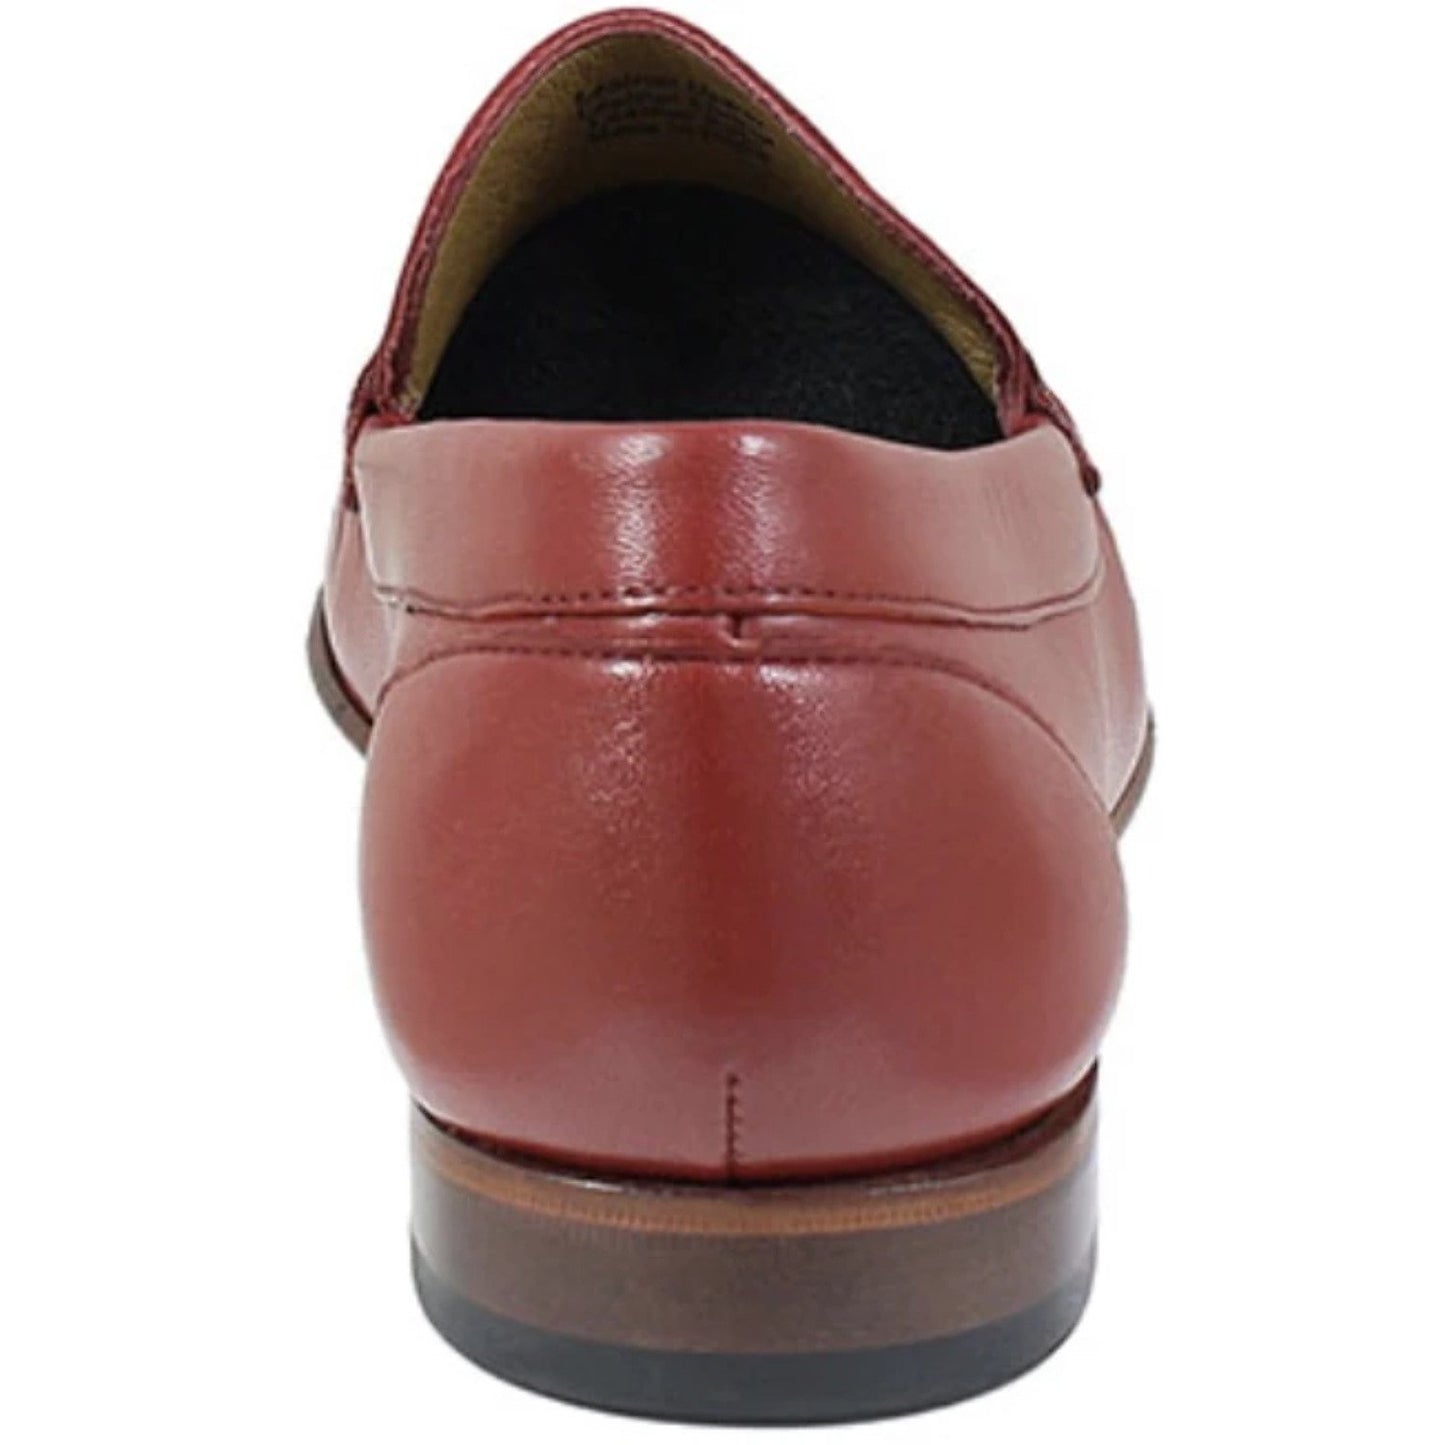 BEAUFORT RED | Florsheim Mens Shoes Beaufort Moc Toe Penny Loafer Slip On Leather Red 11869-600-Brandy